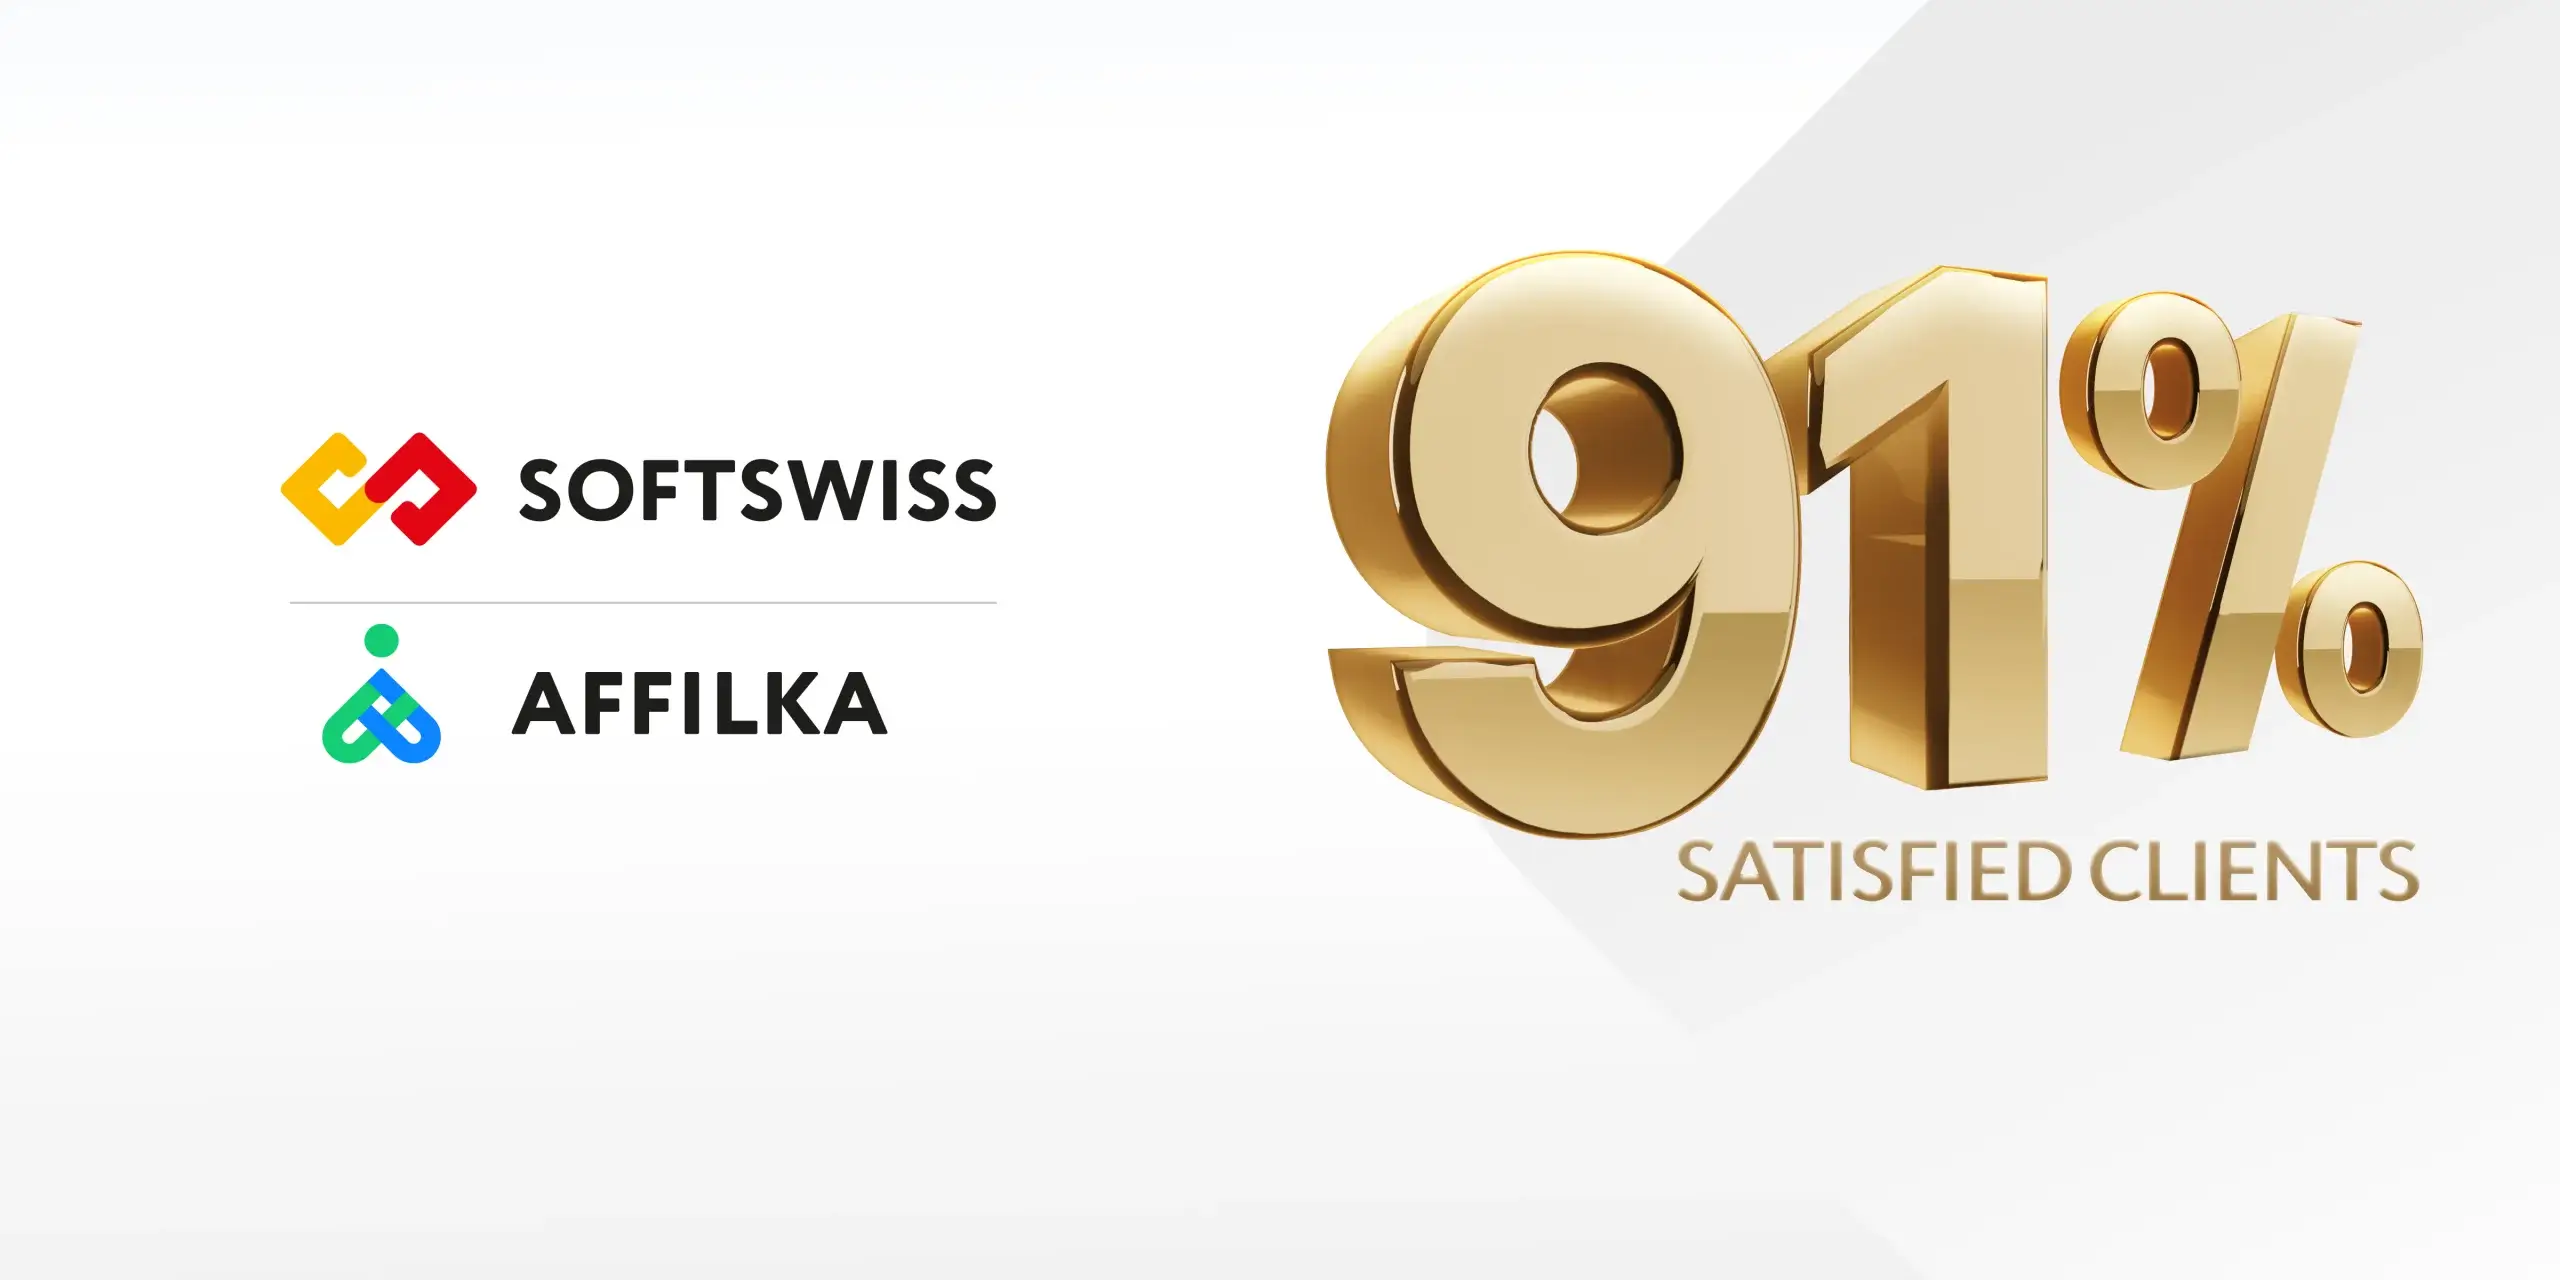 Affilka Scores 91% Satisfaction in Kantar Survey